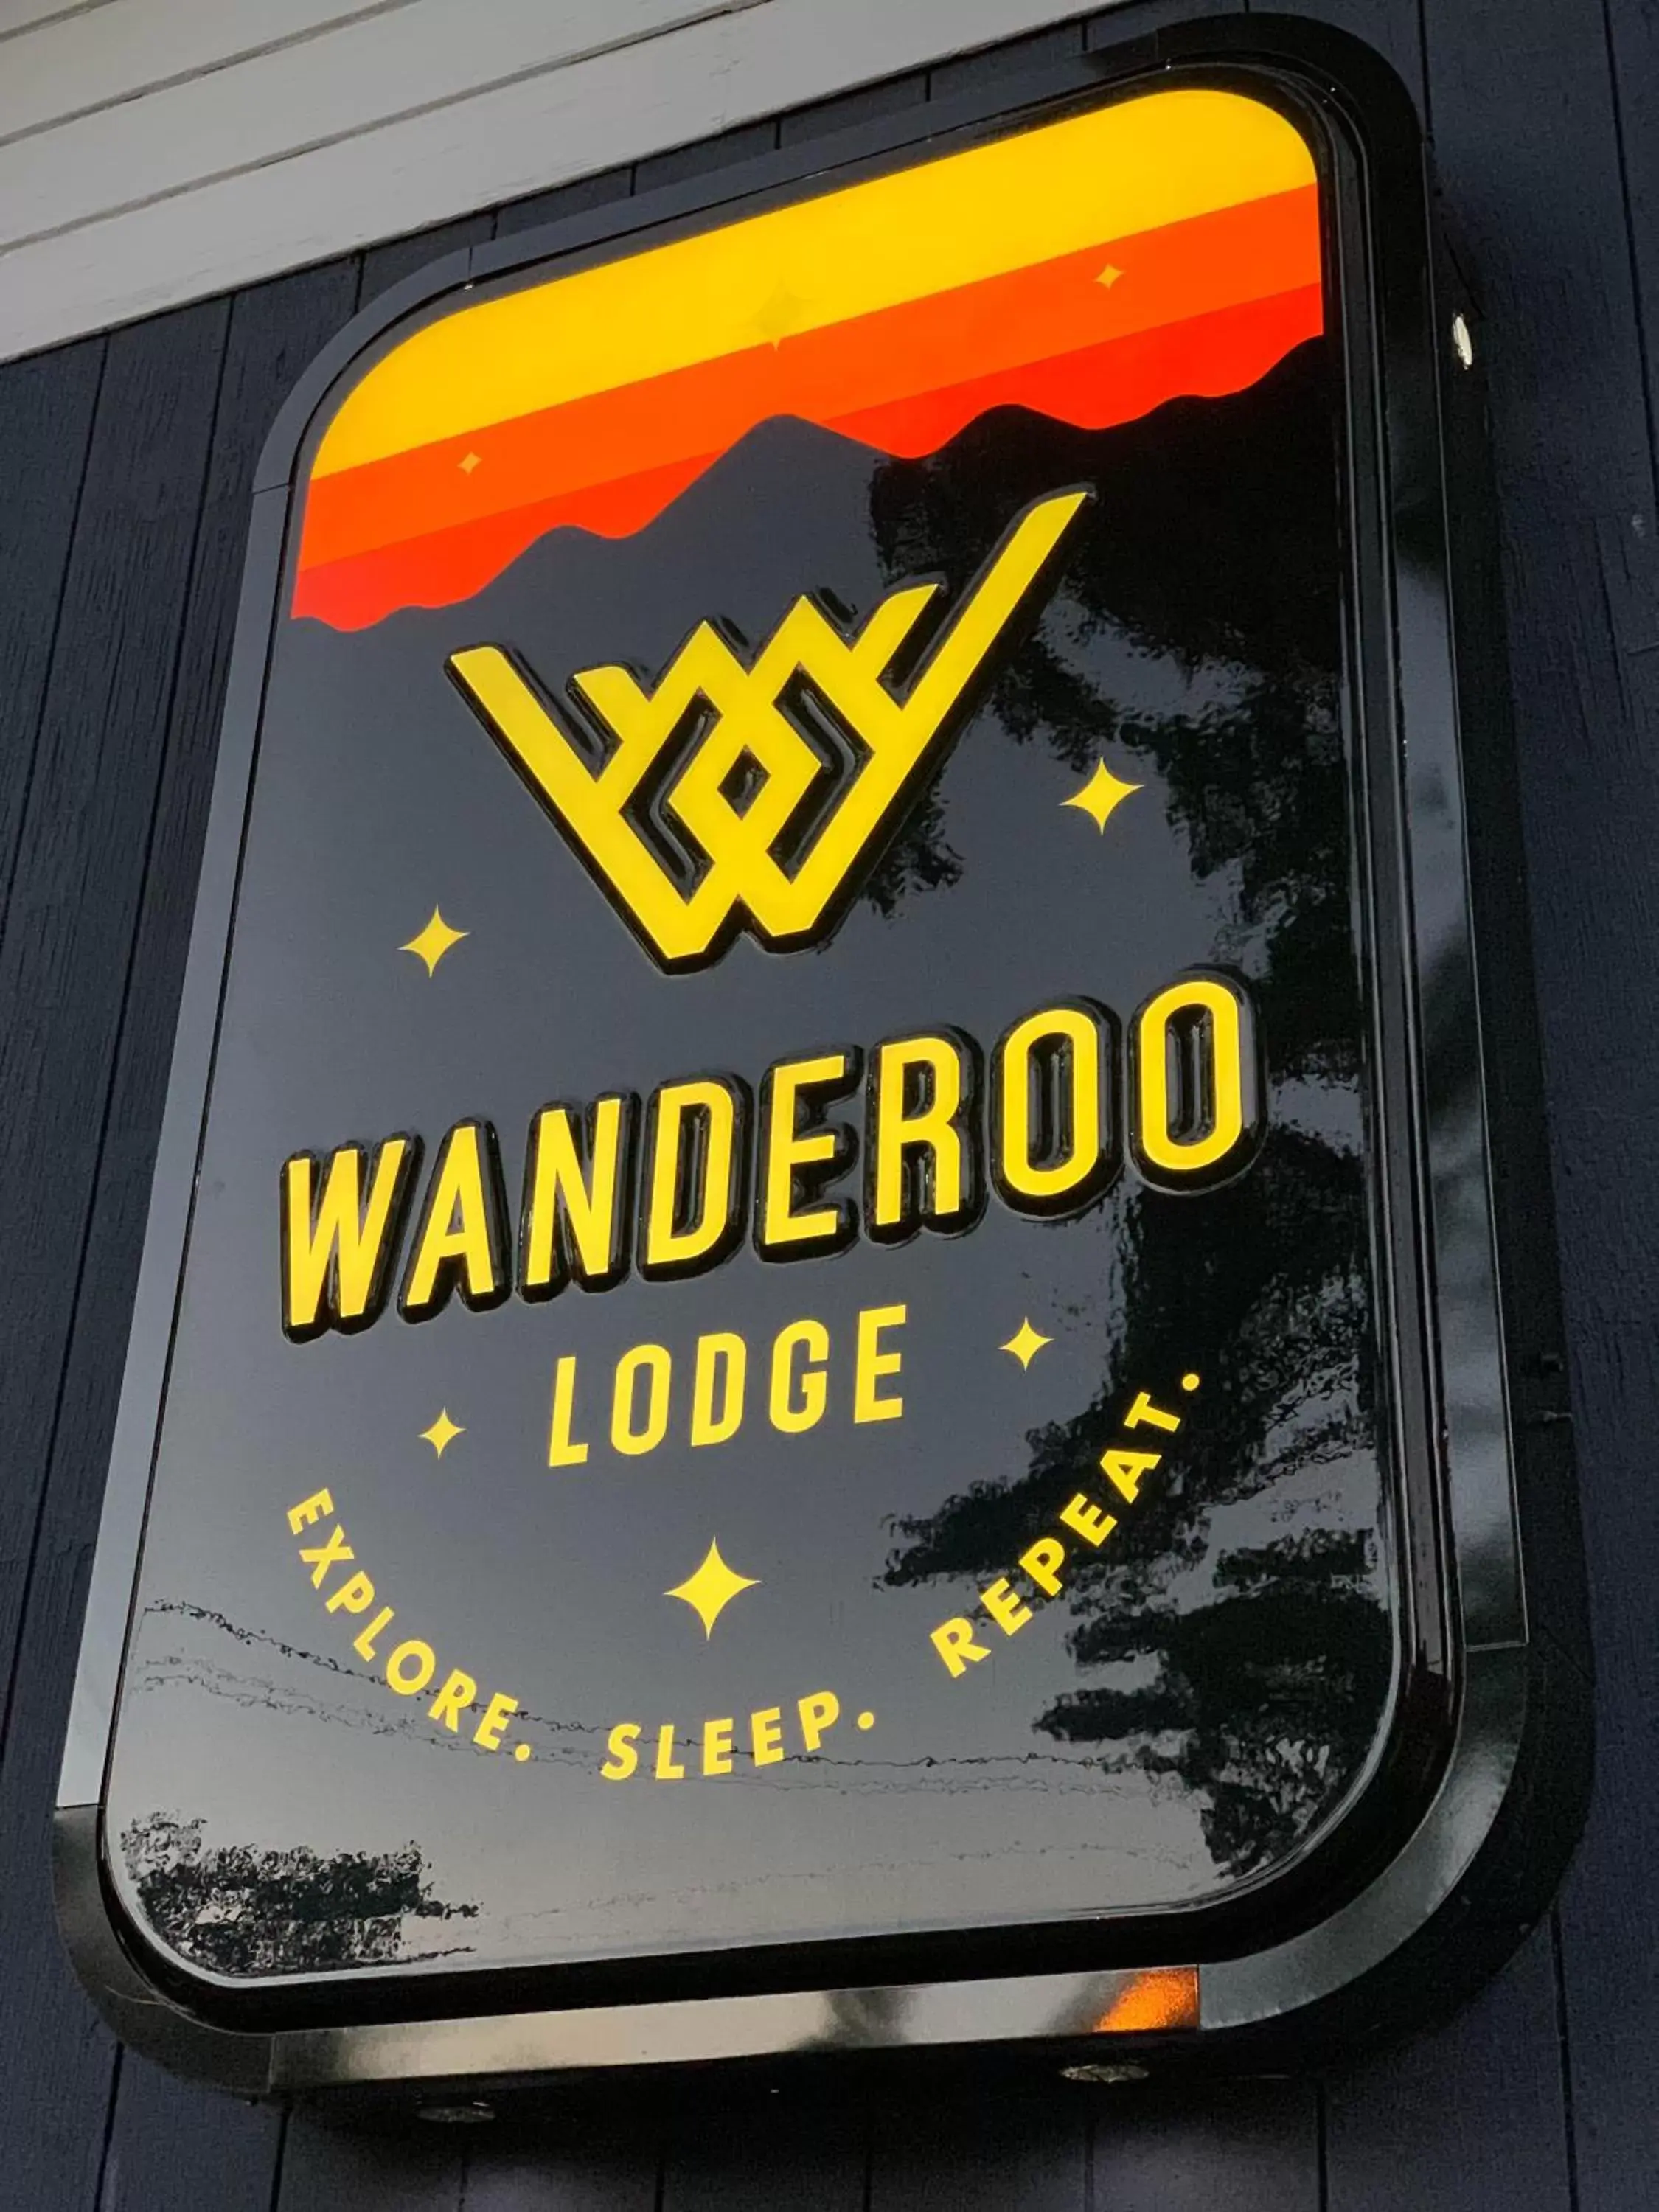 The Wanderoo Lodge